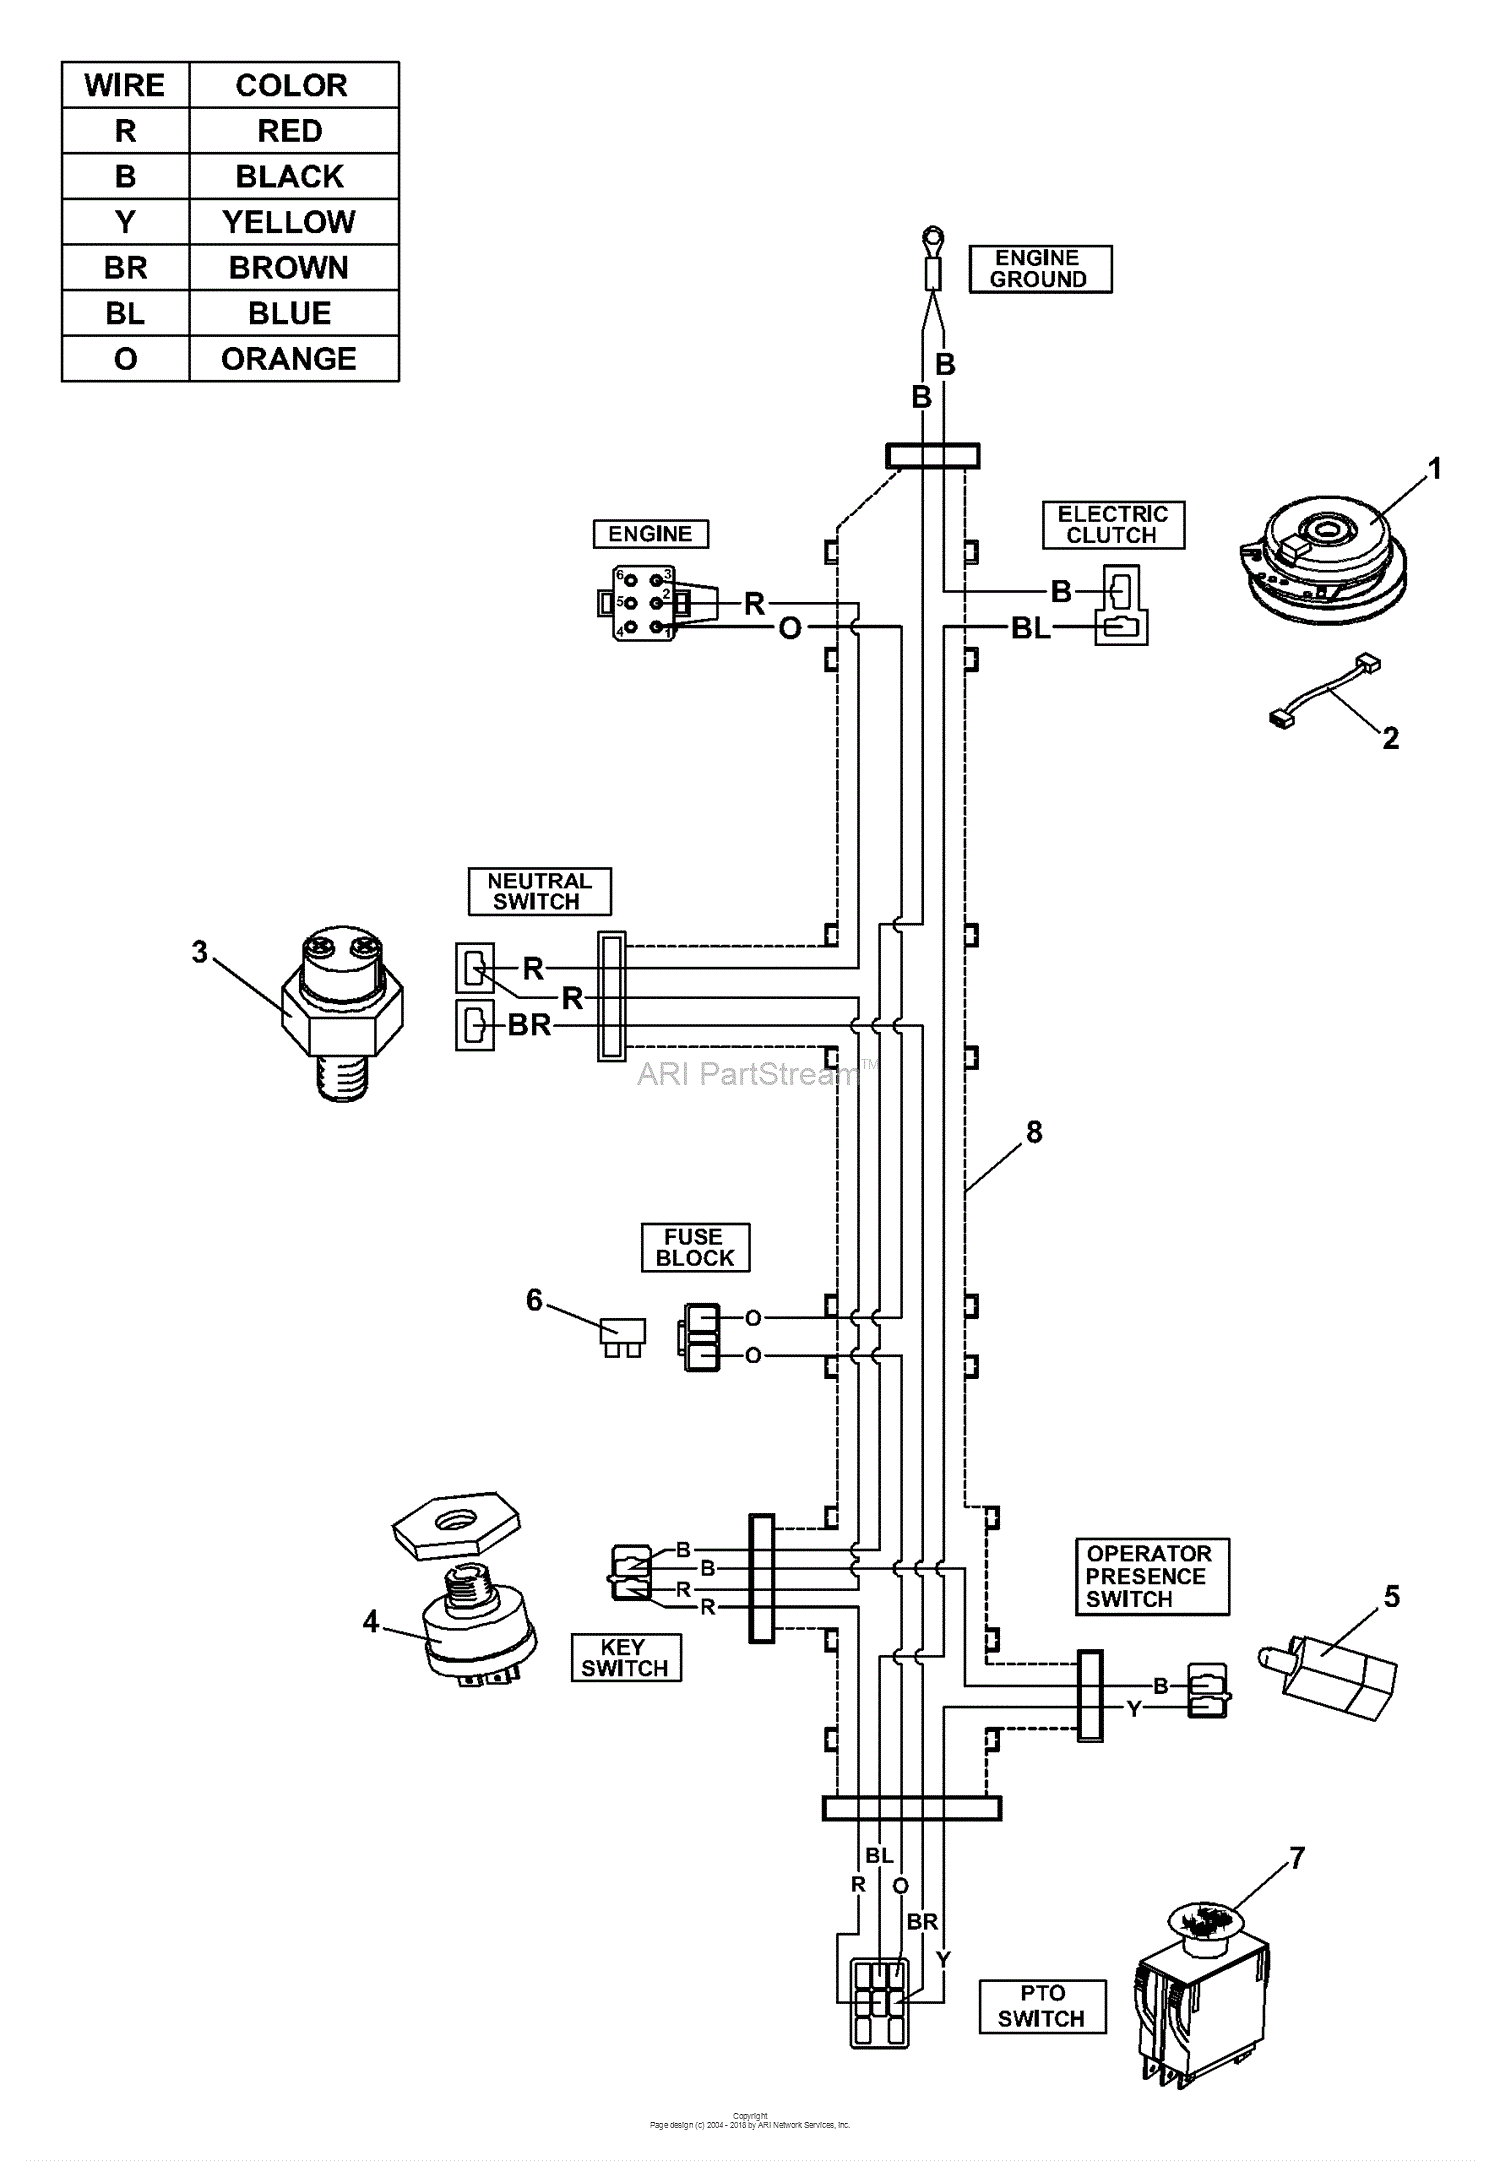 briggs and stratton 40r877 wiring diagram